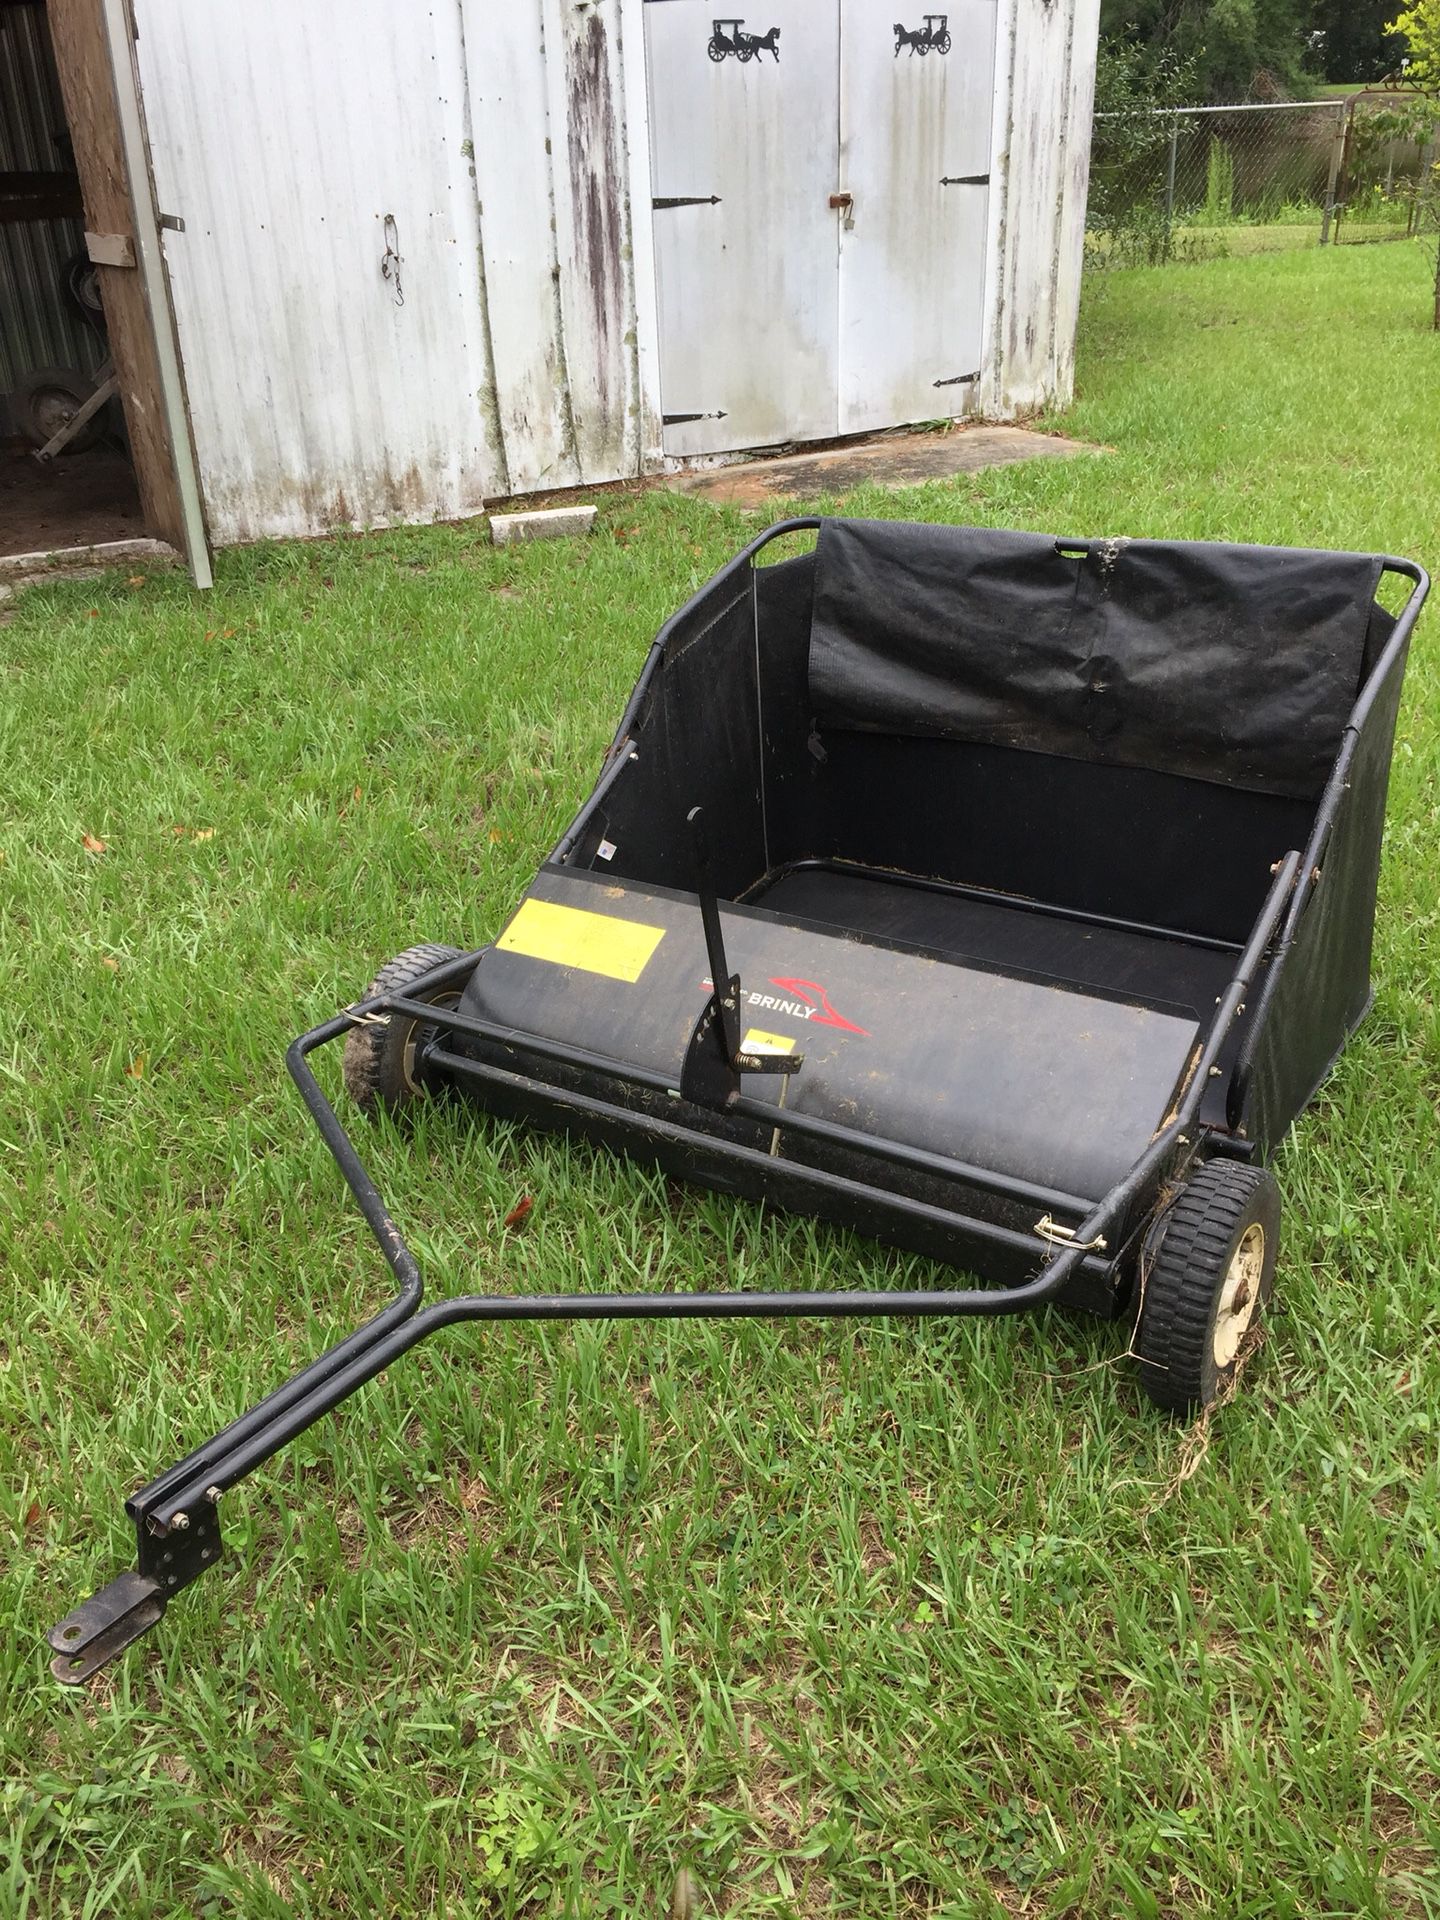 Lawn grooming equipment